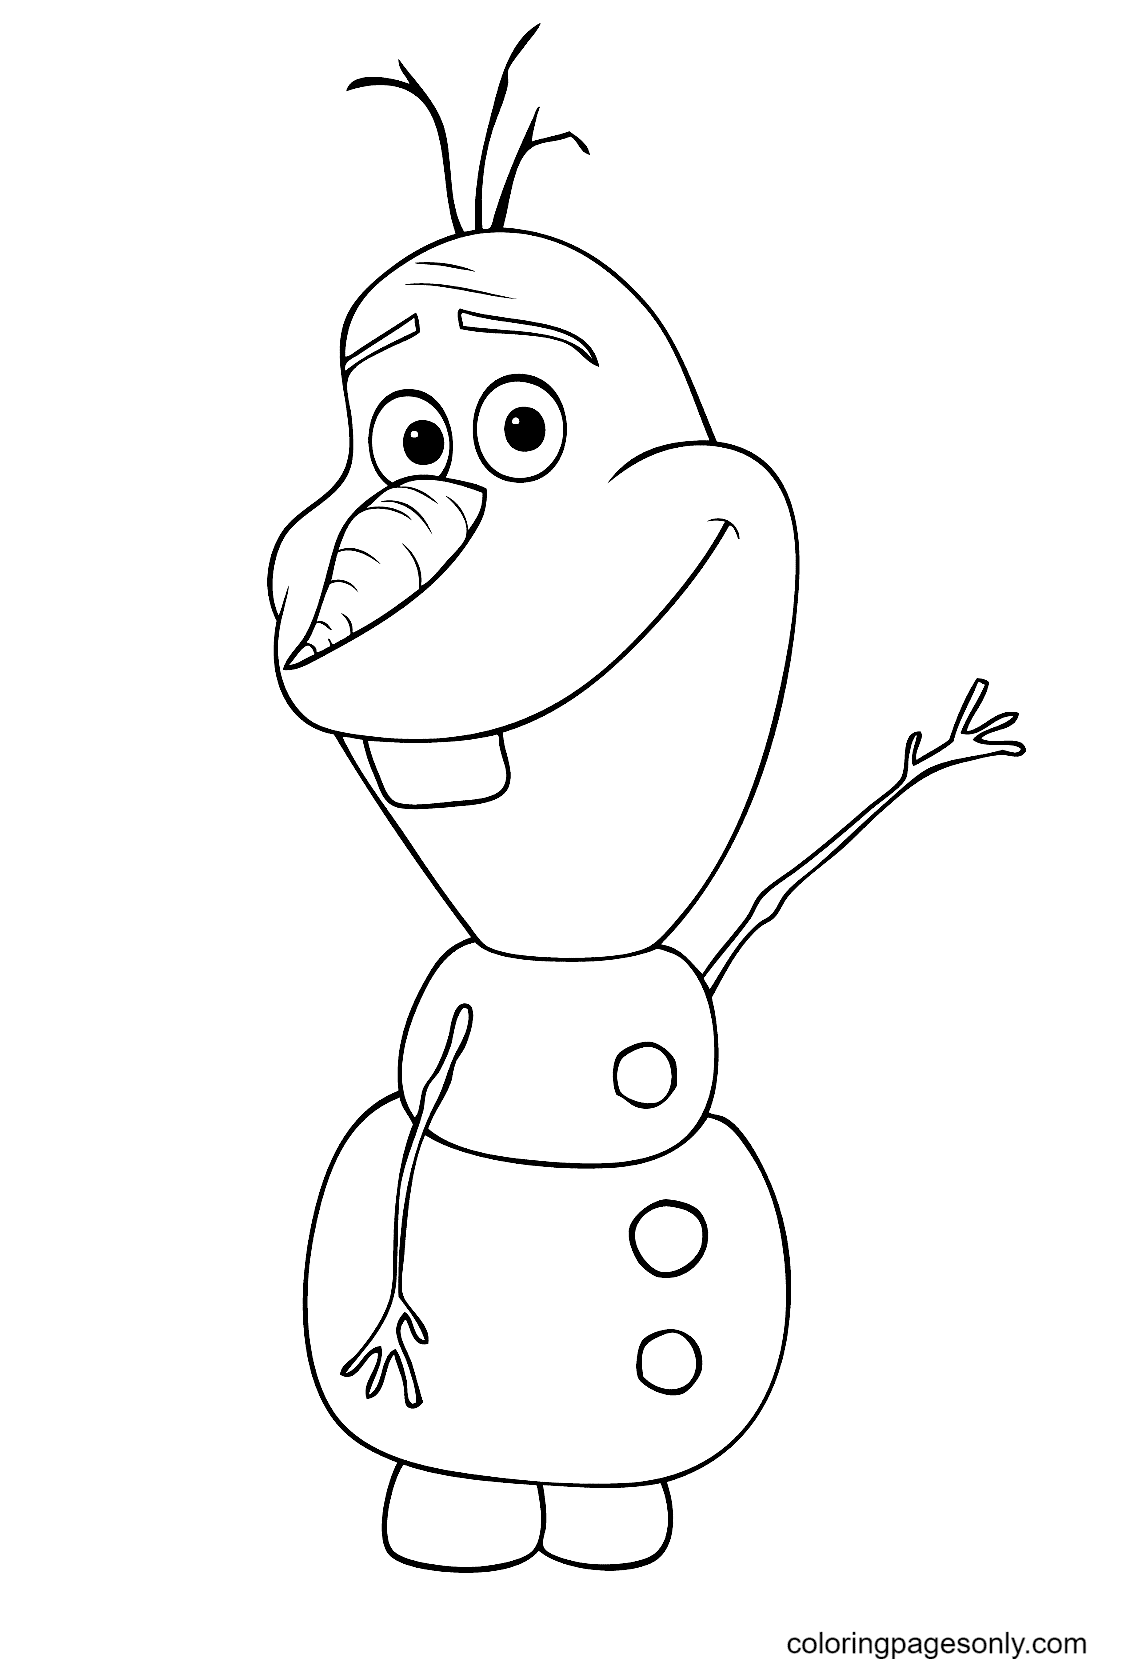 Süßer Olaf von Olaf